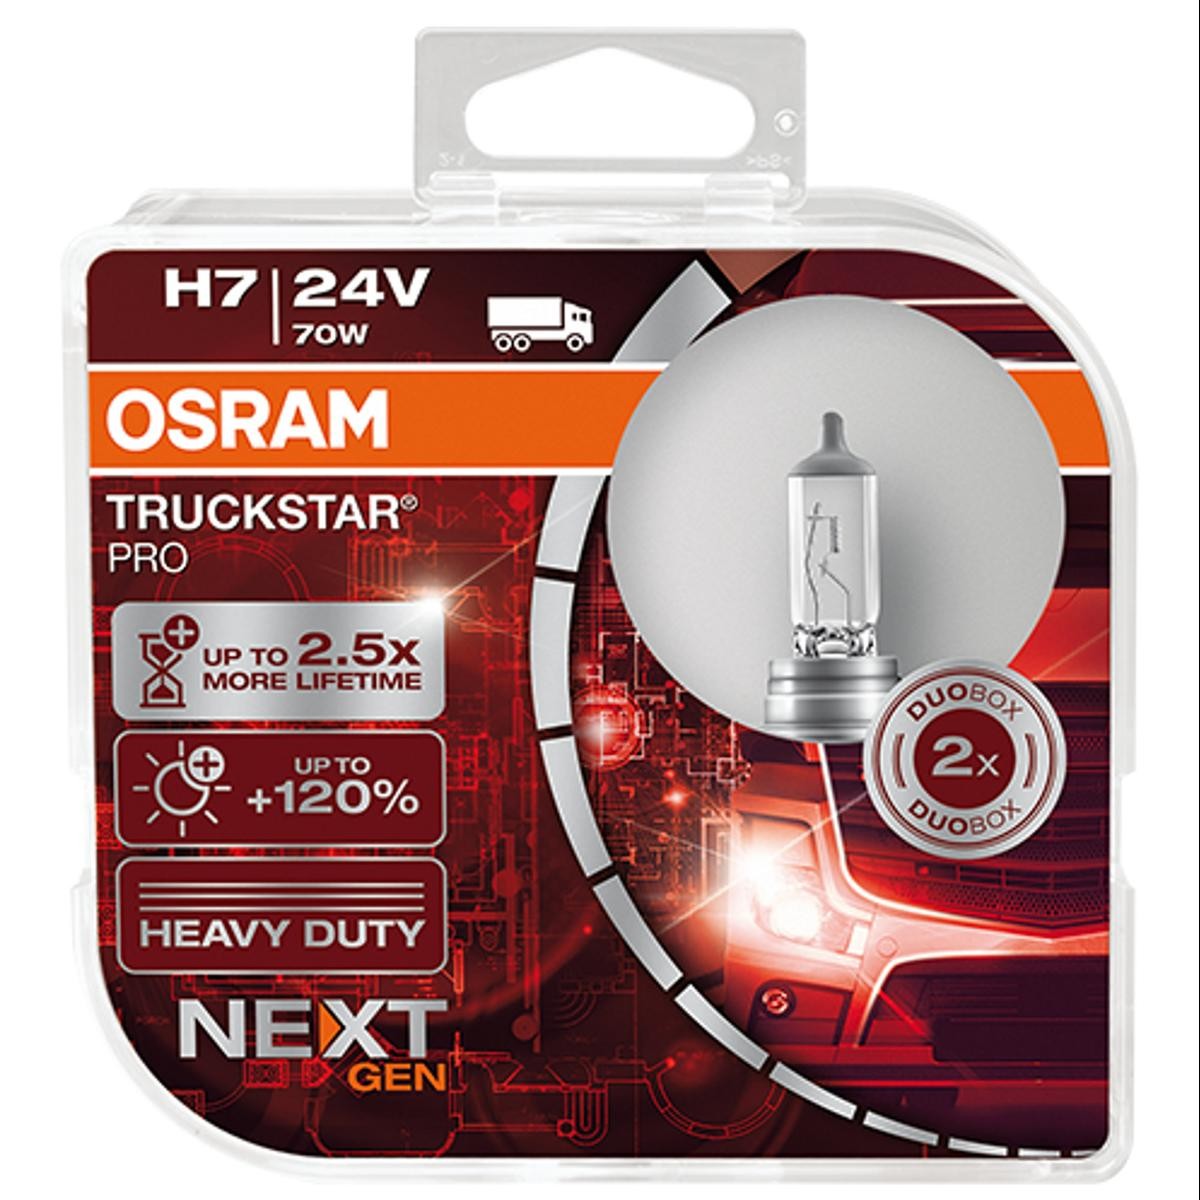 Osram Aktions-Paket - 30x H7 24V 70W P26d Original + 1x Sammel-Metallschild  LKW OS 64215_30